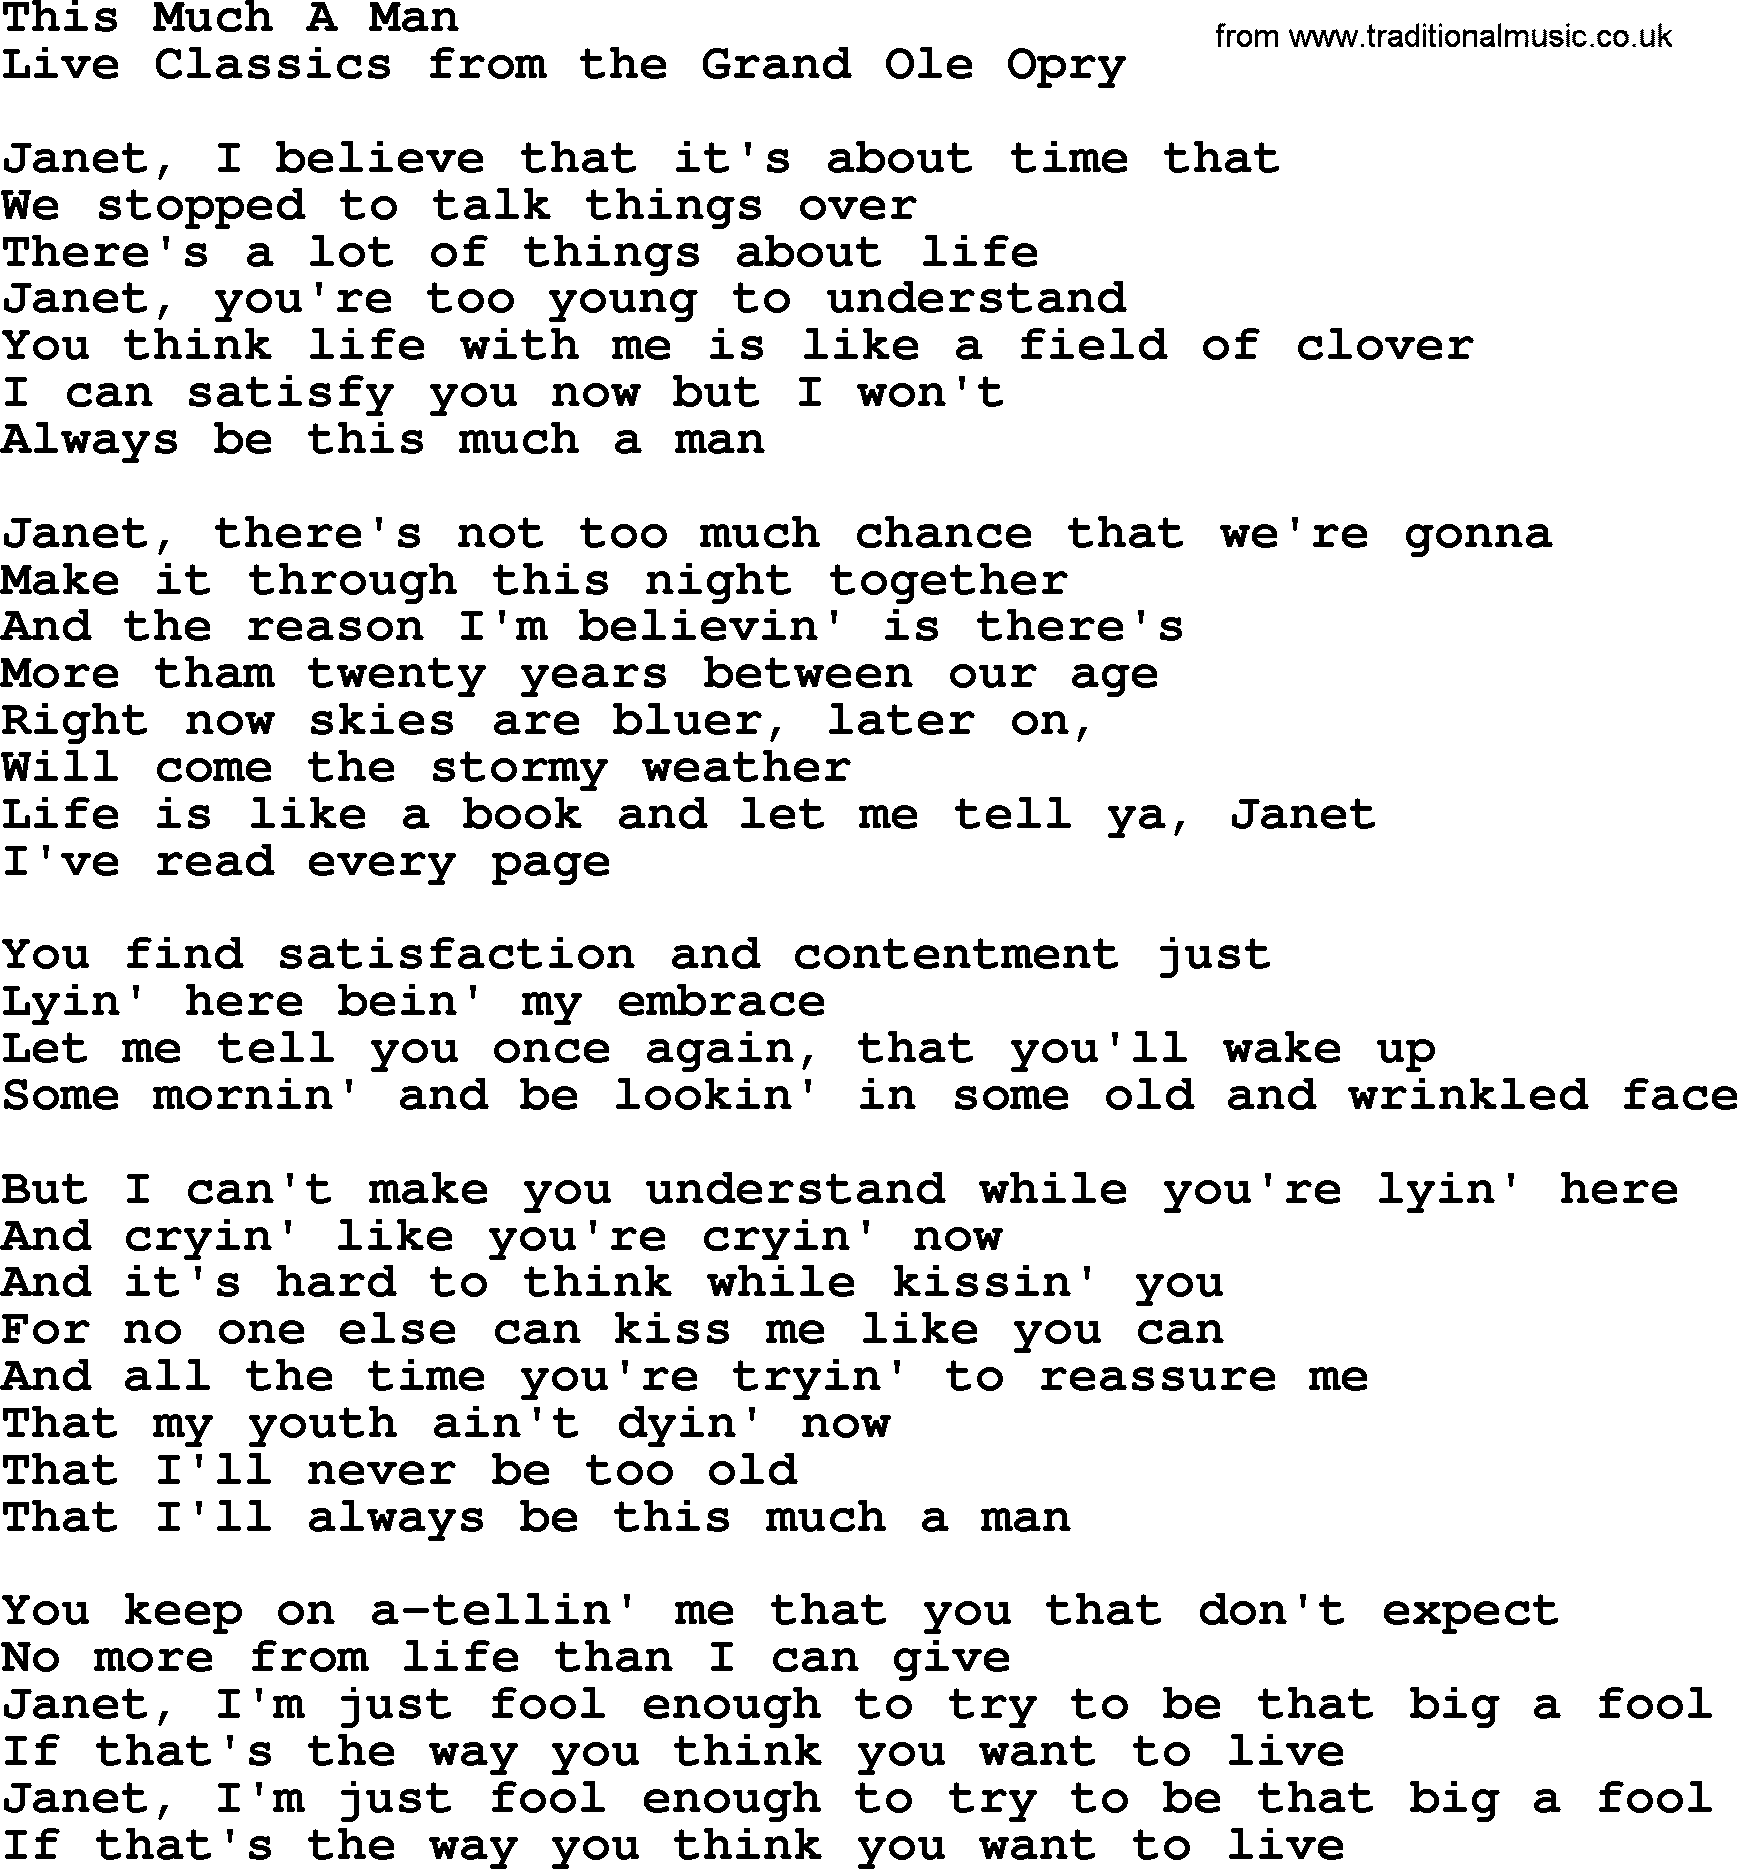 Marty Robbins song: This Much A Man, lyrics